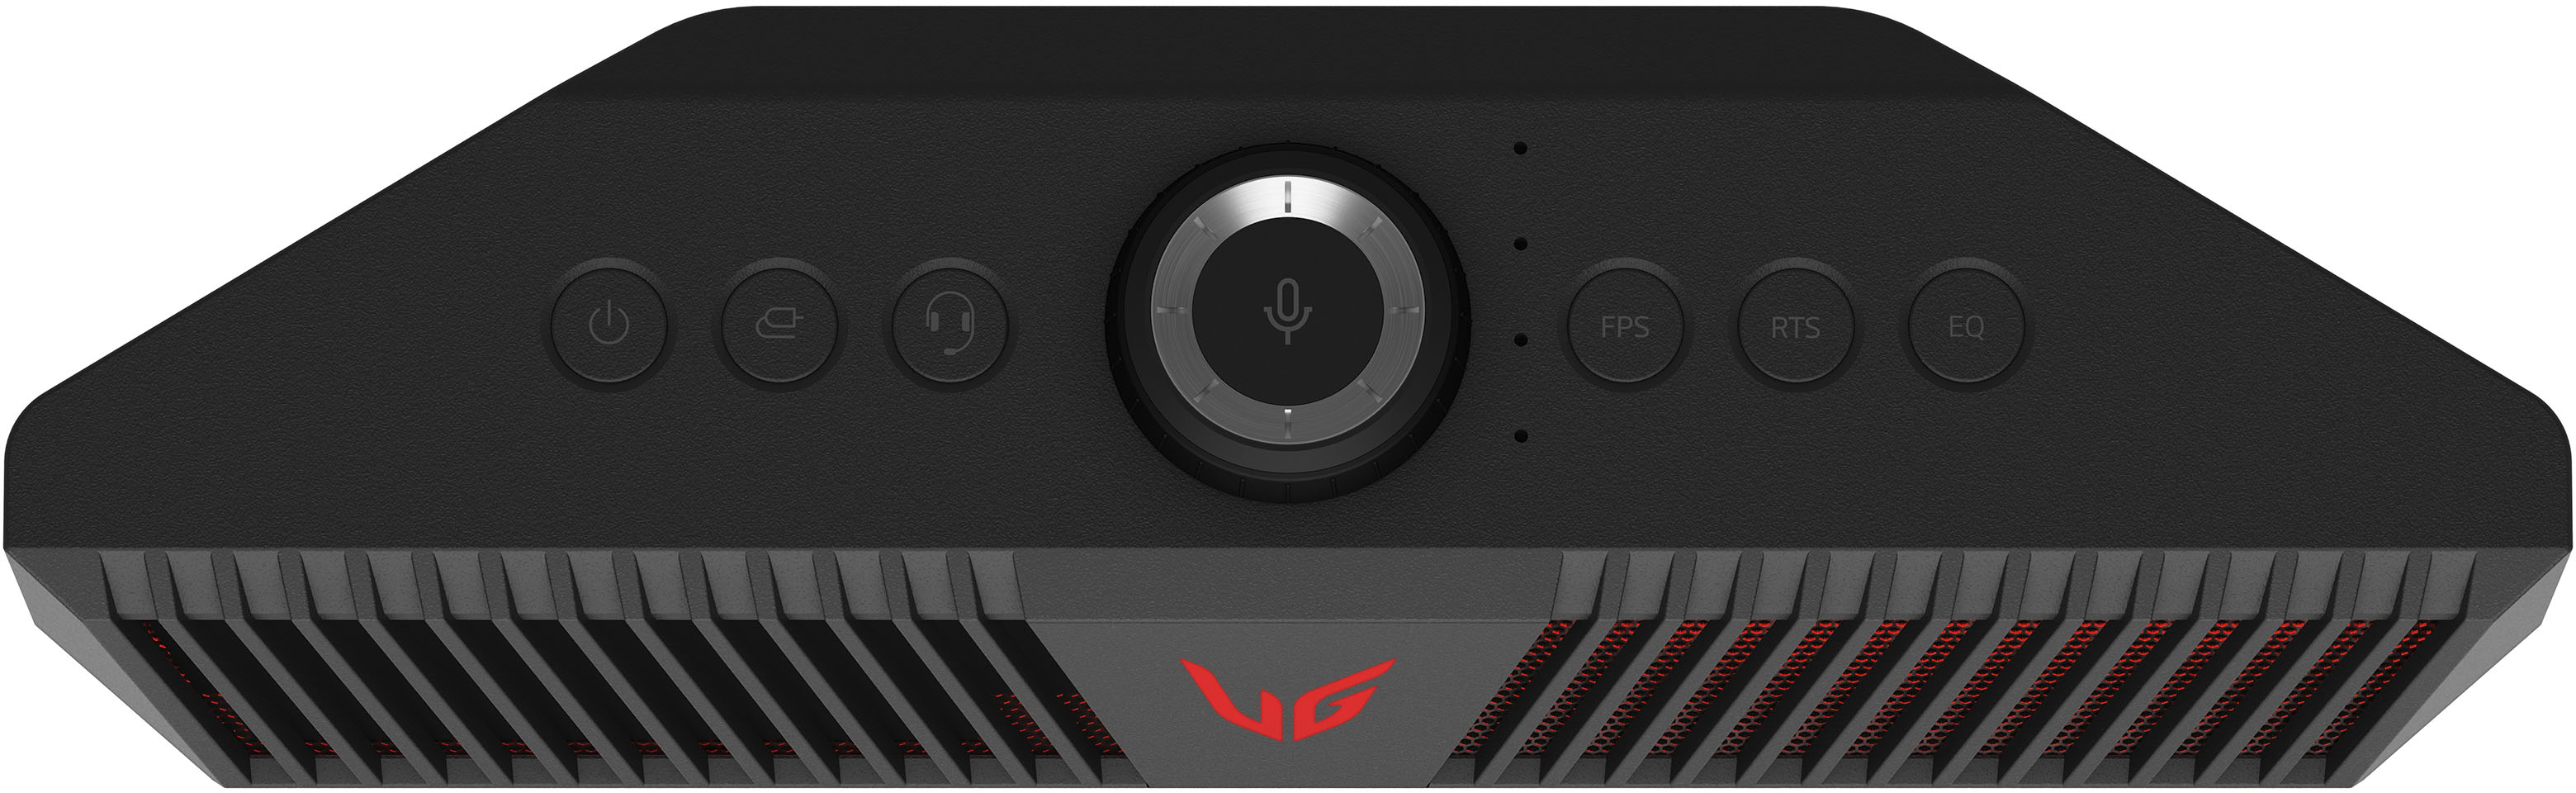 Enceinte Gaming LG UltraGear GP9, DAC Quad Hi-FI Son haute résolution, DTS Headphone:X, micro Chat vocal - LG GP9